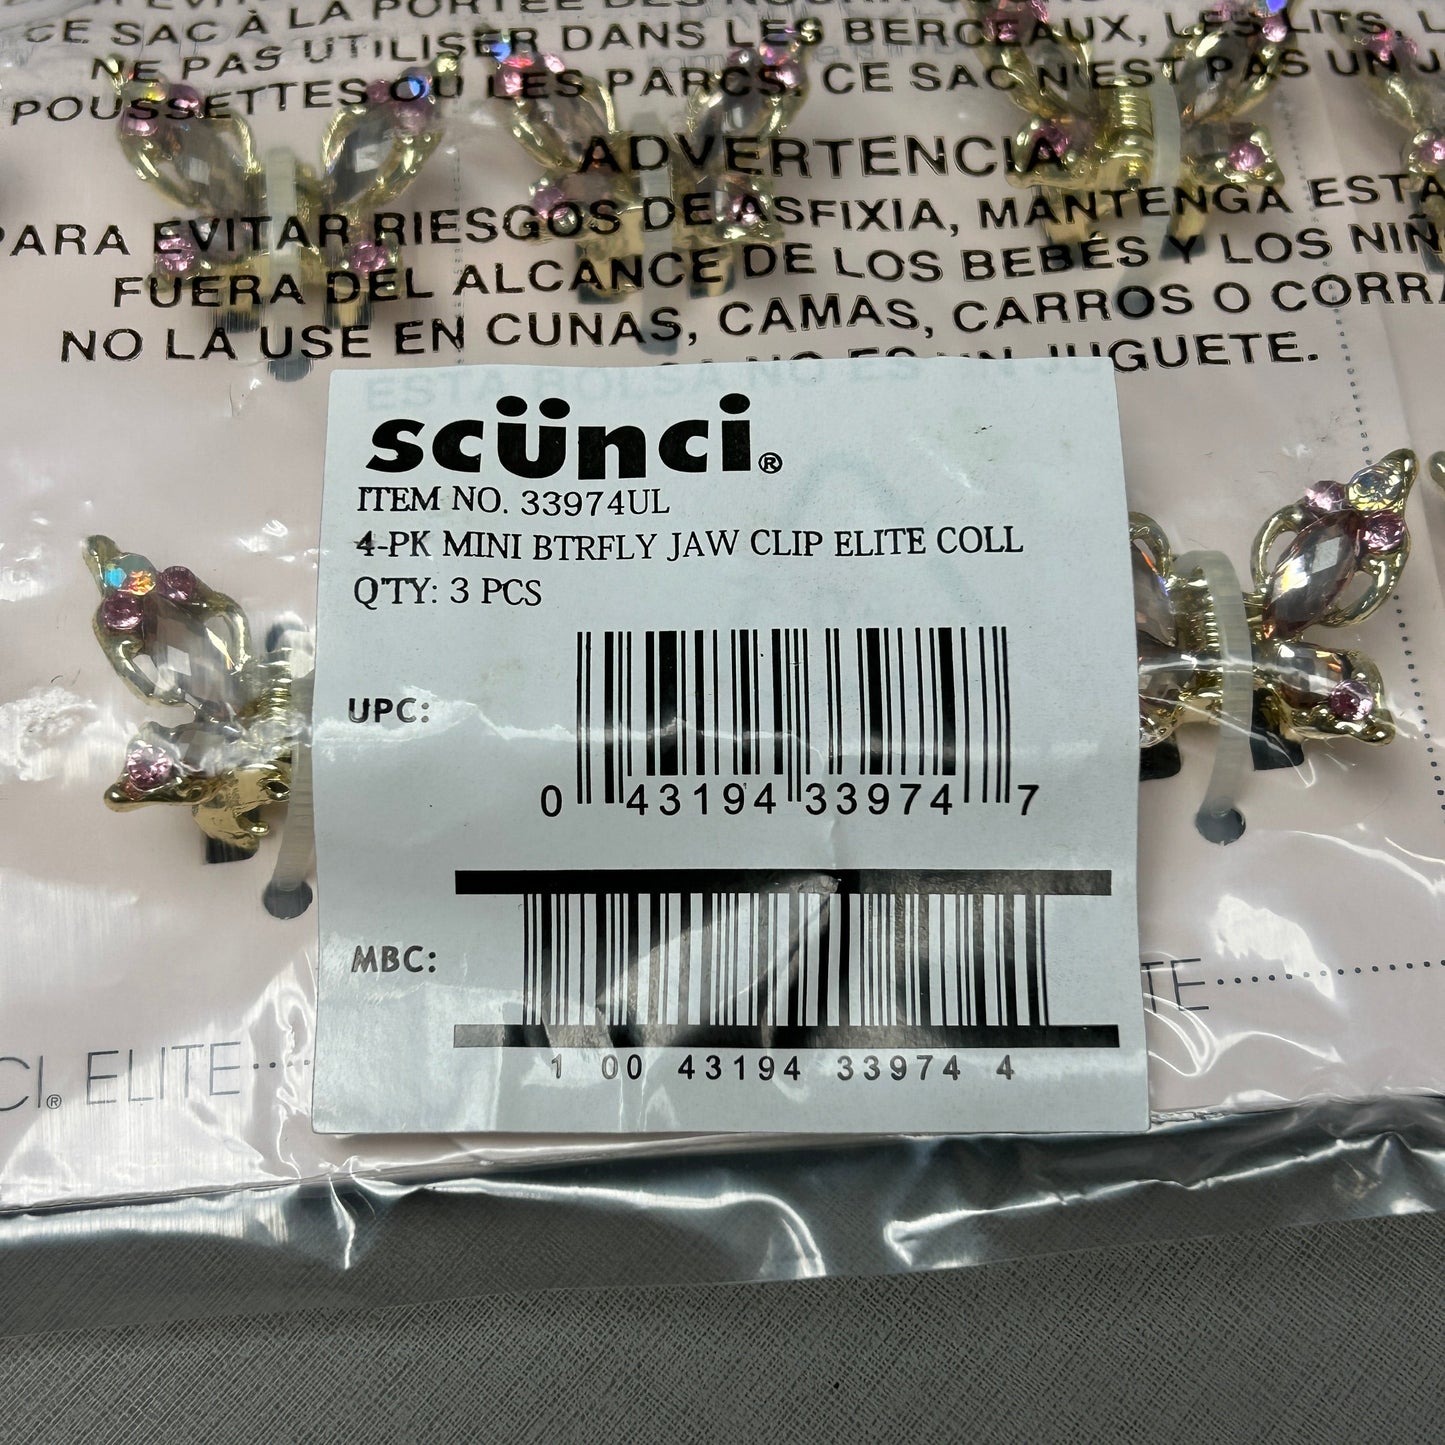 SCUNCI Elite Mini Butterfly Jaw Clip, 4-Pieces (New)